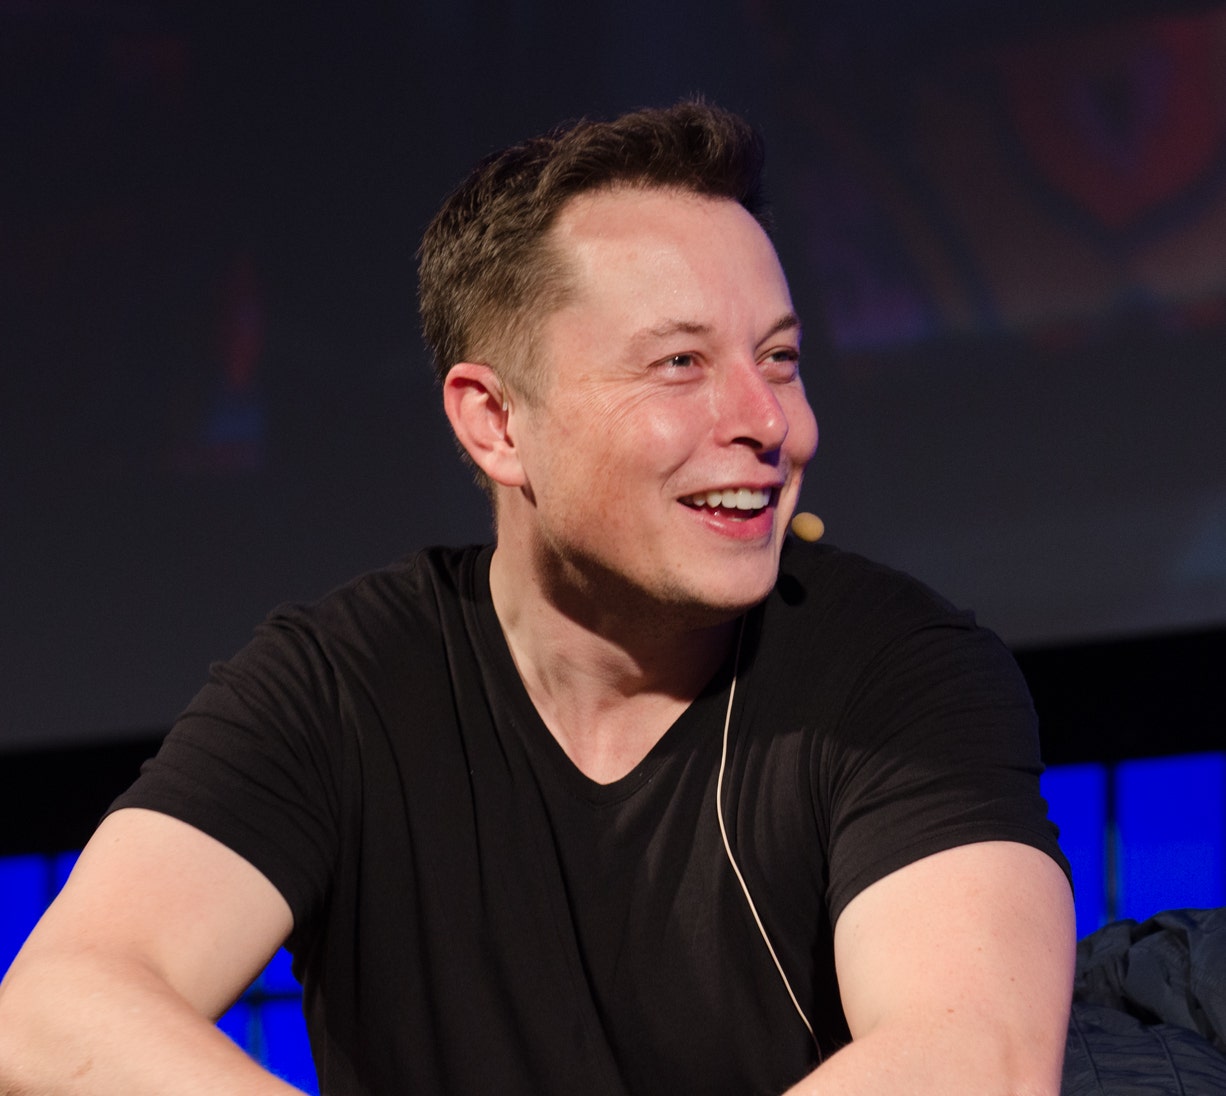 Elon Musk Responds To Dogecoin 'Squid Game' Meme, Backs Call For Nodes To Upgrade